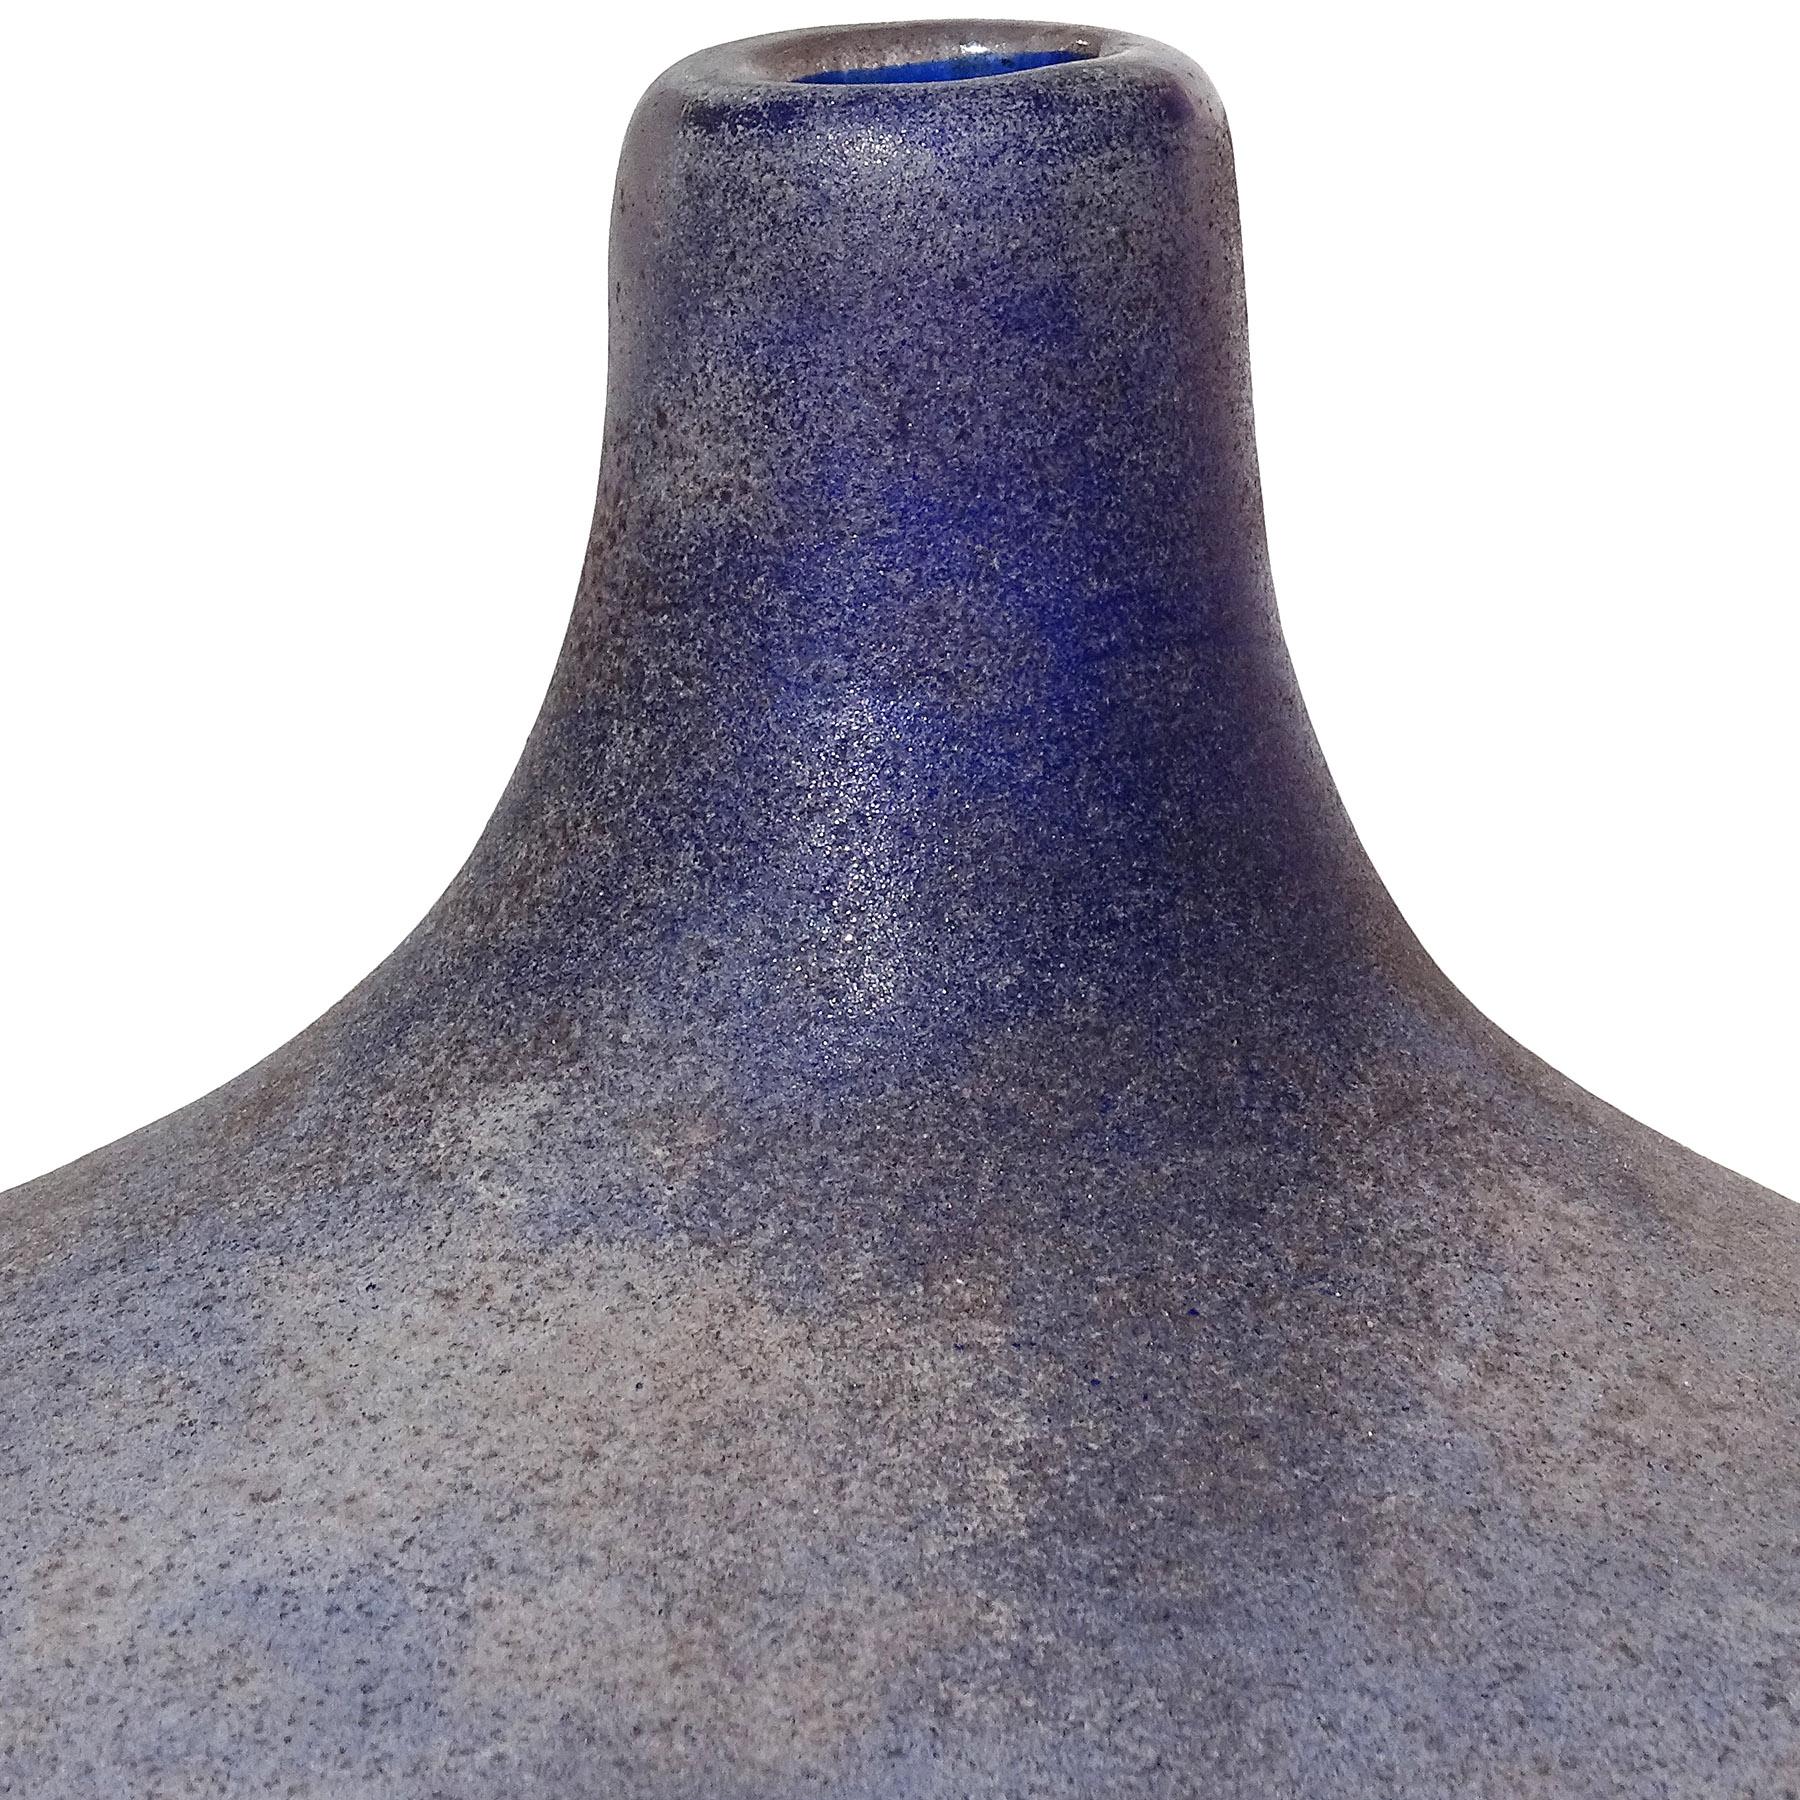 Cenedese Xlrg Murano Blue Black Gray Scavo Texture Italian Art Glass Flower Vase For Sale 2